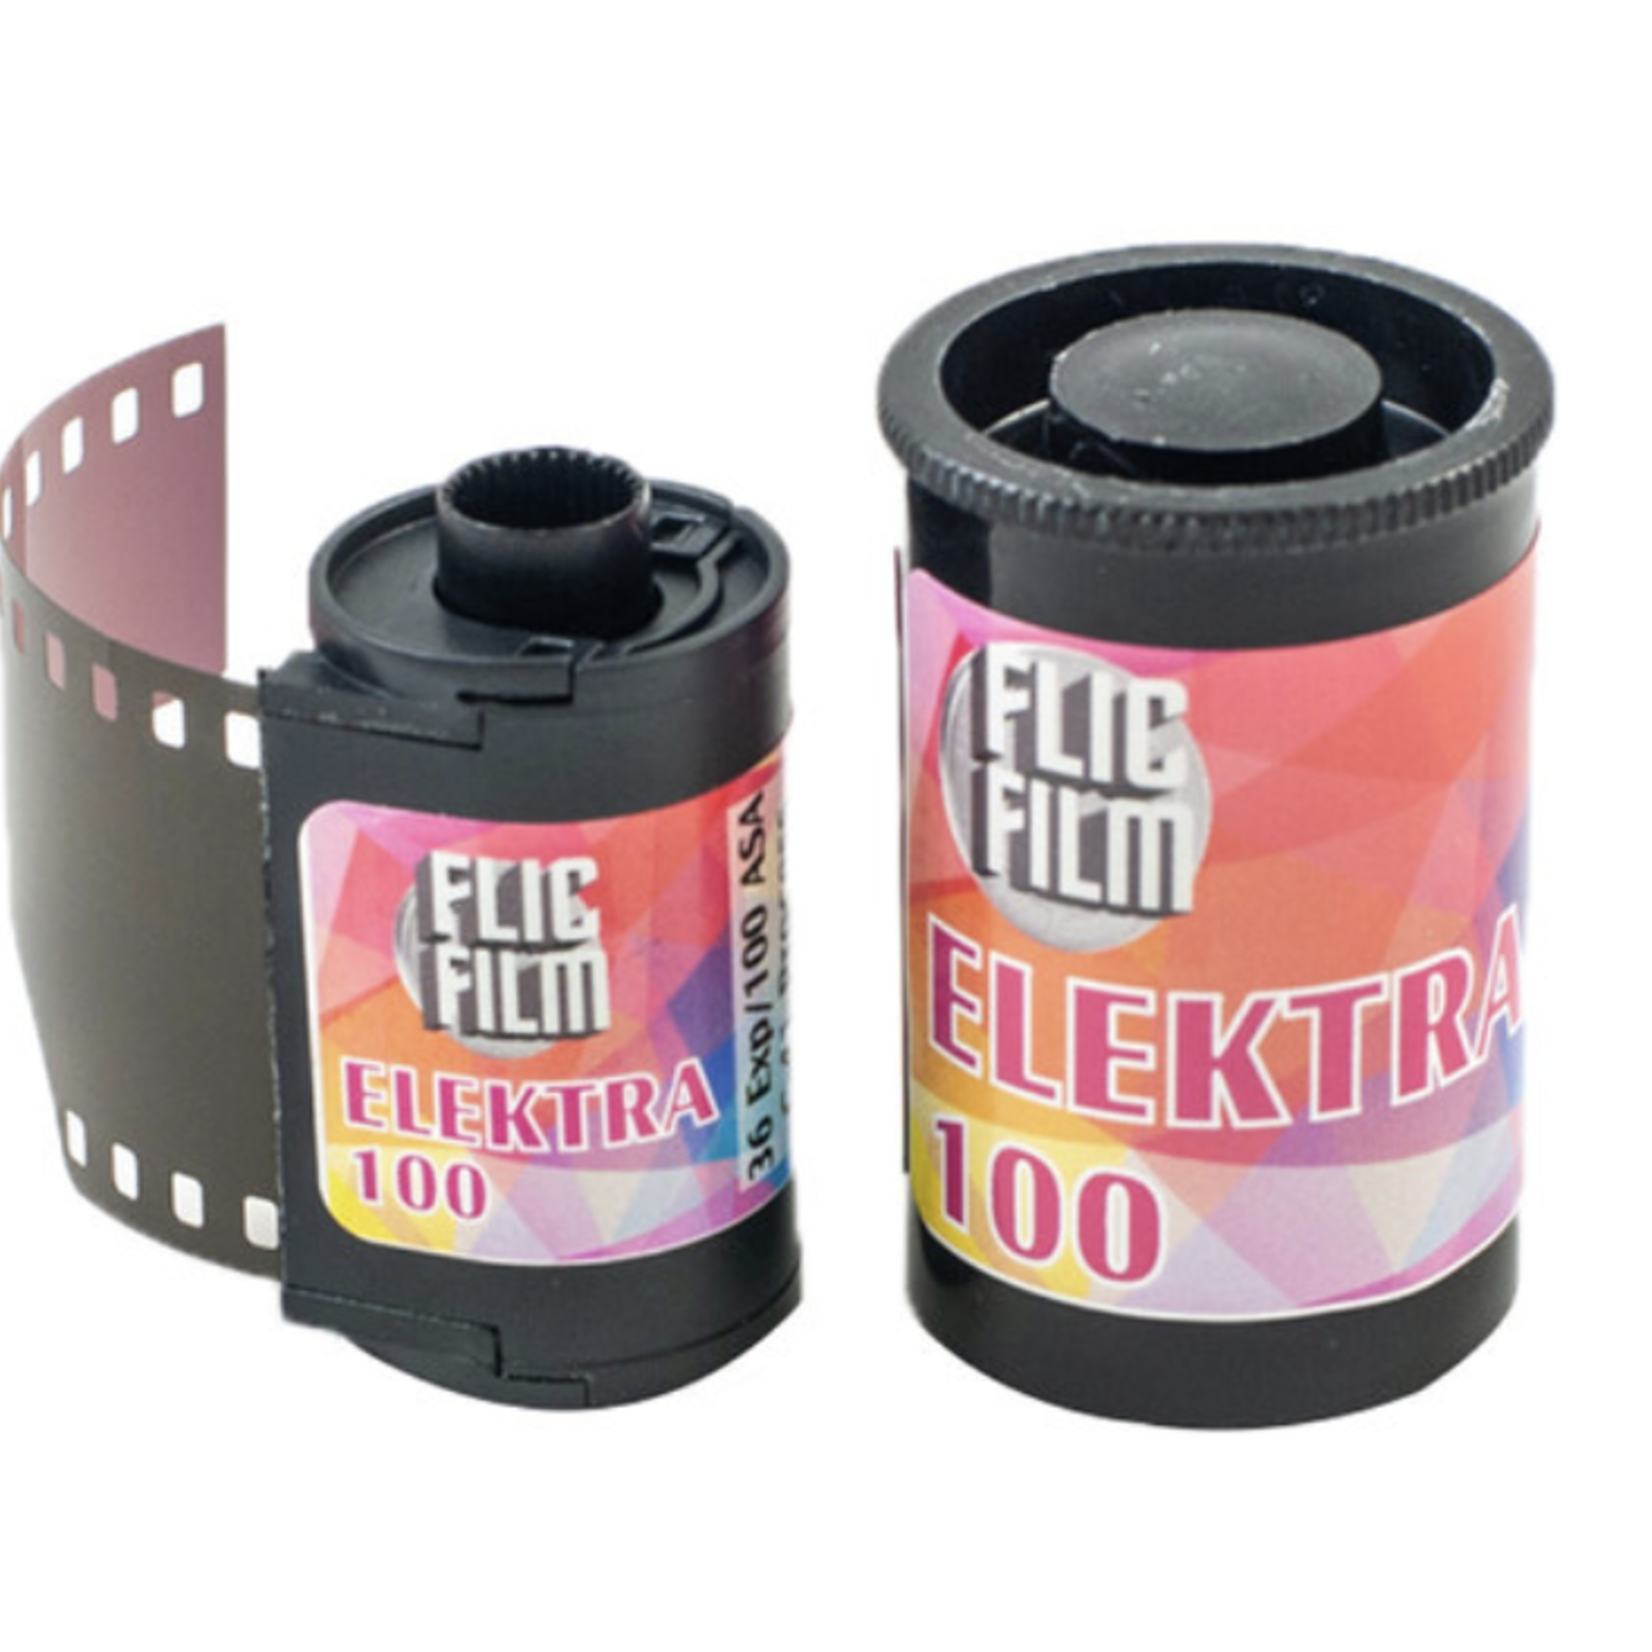 Flic Film Flic Film Elektra 100 135-36 Color Film